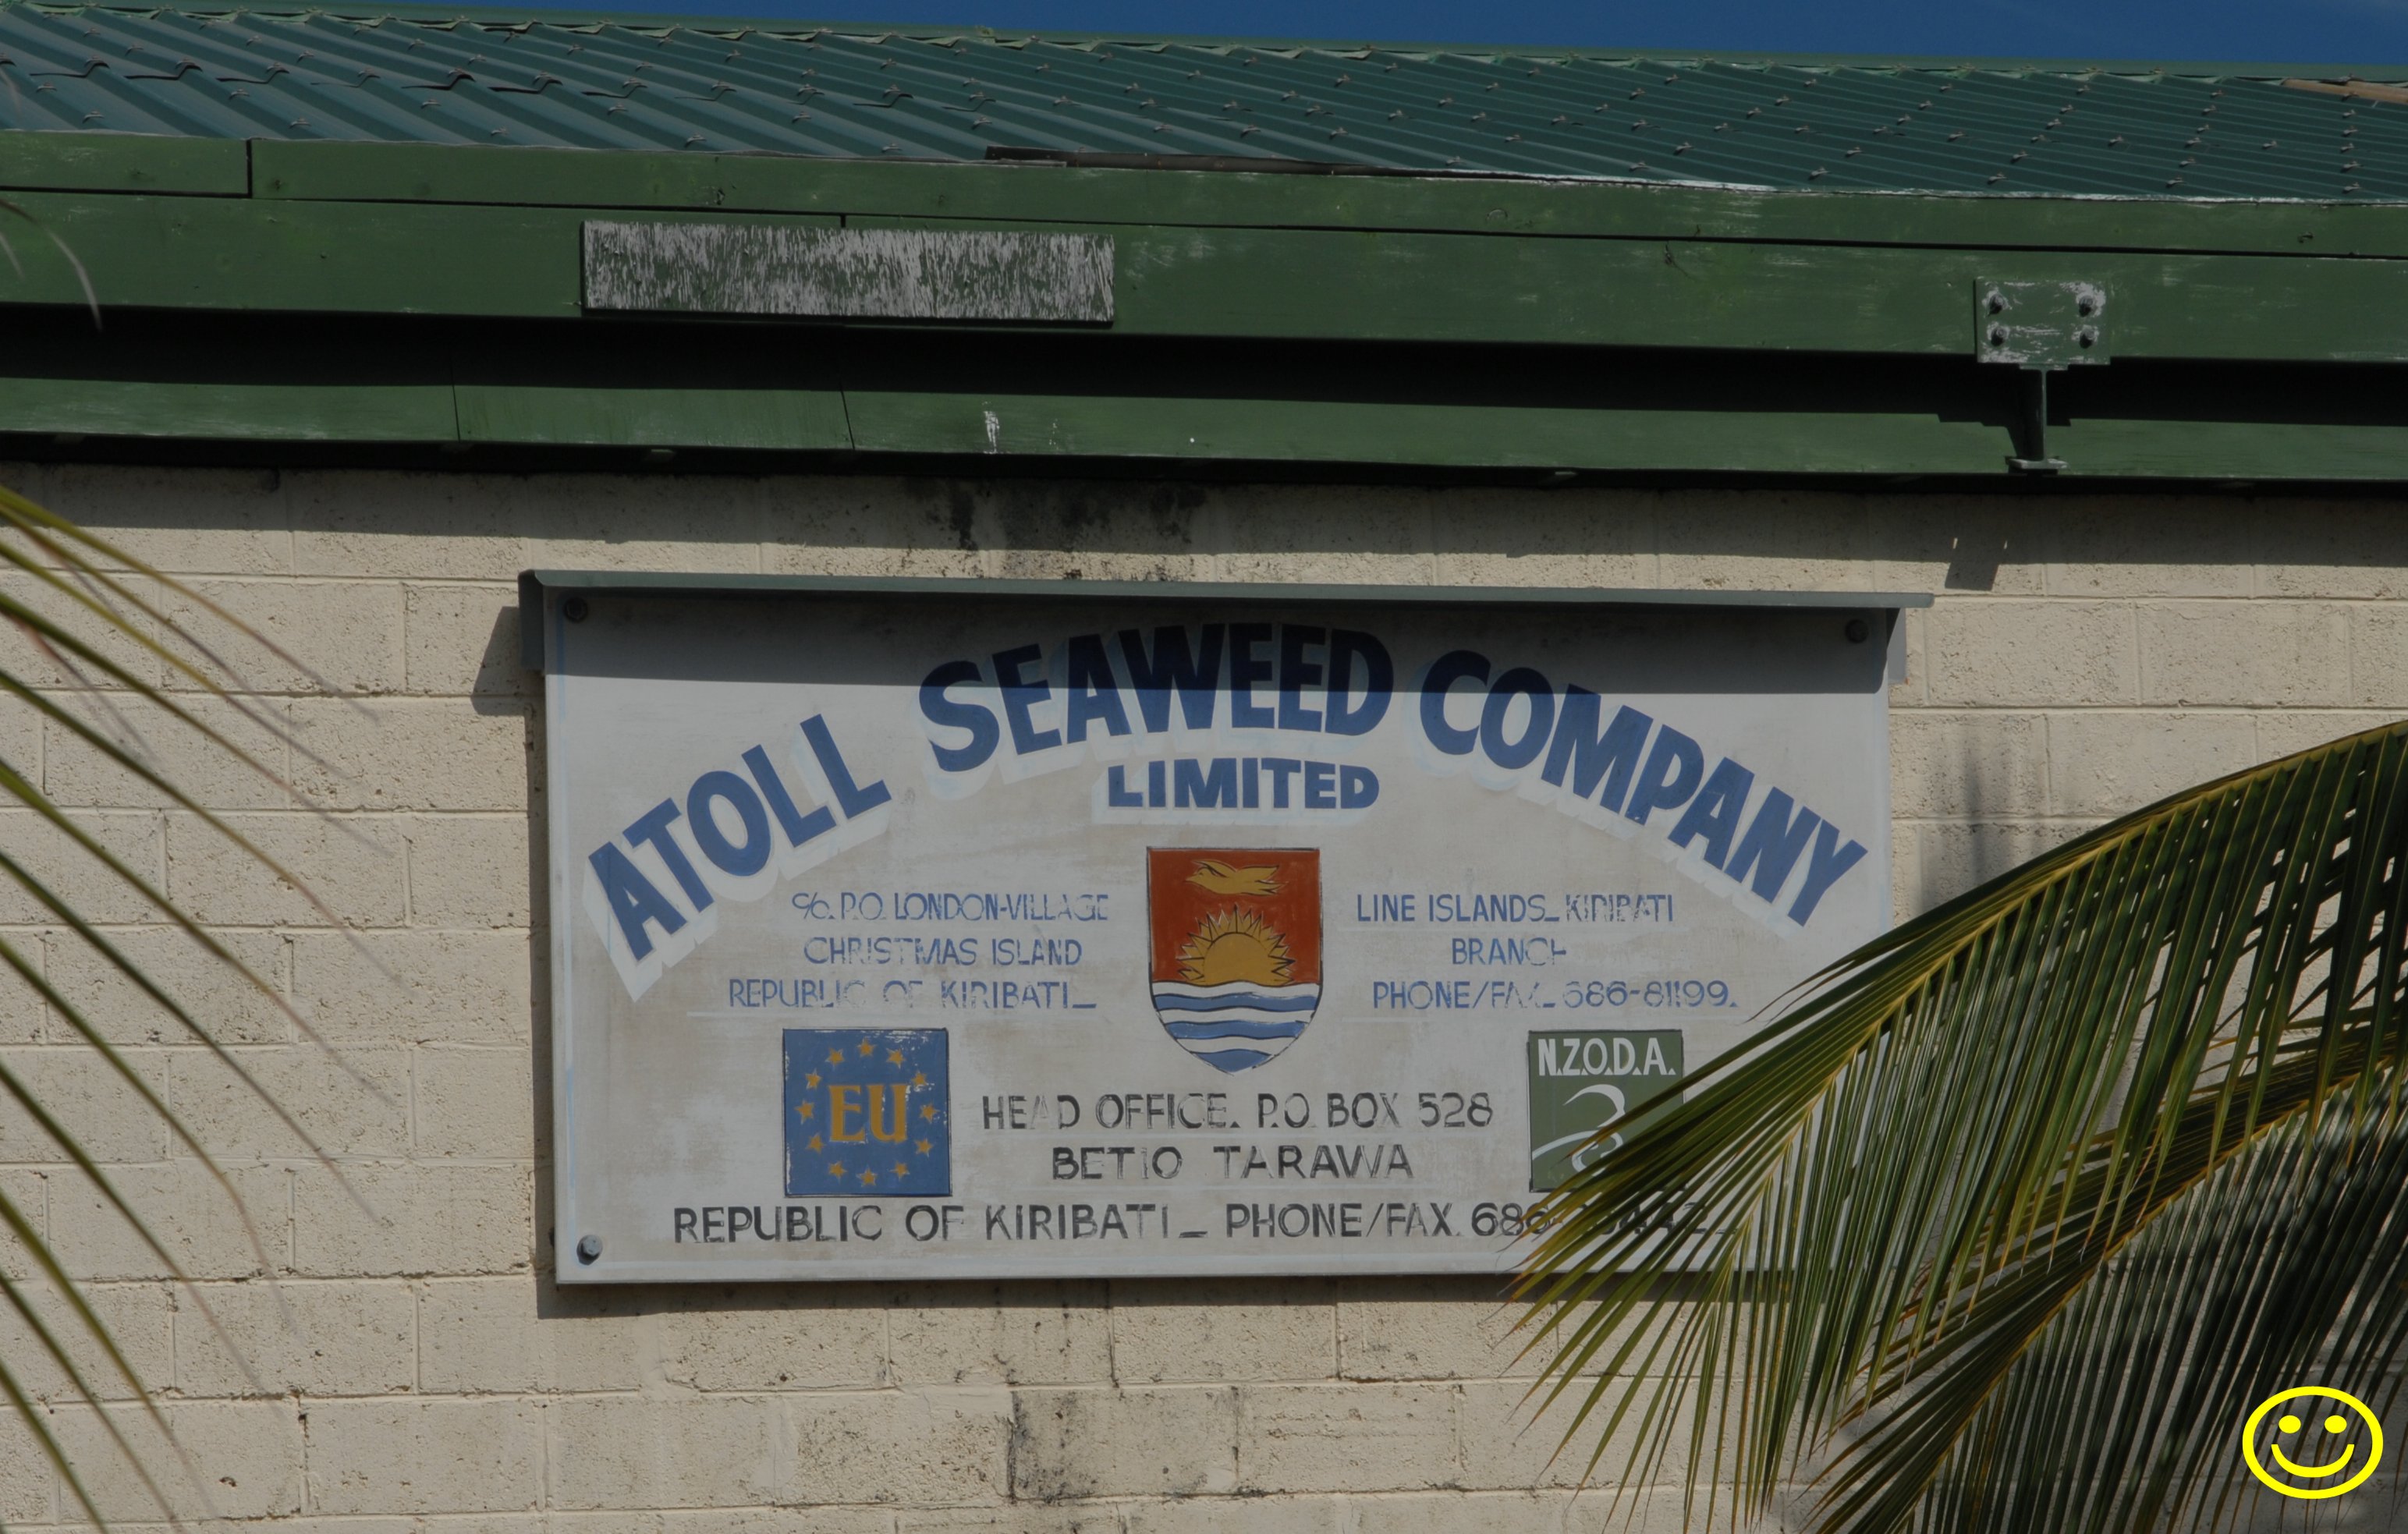 Atoll seaweed company